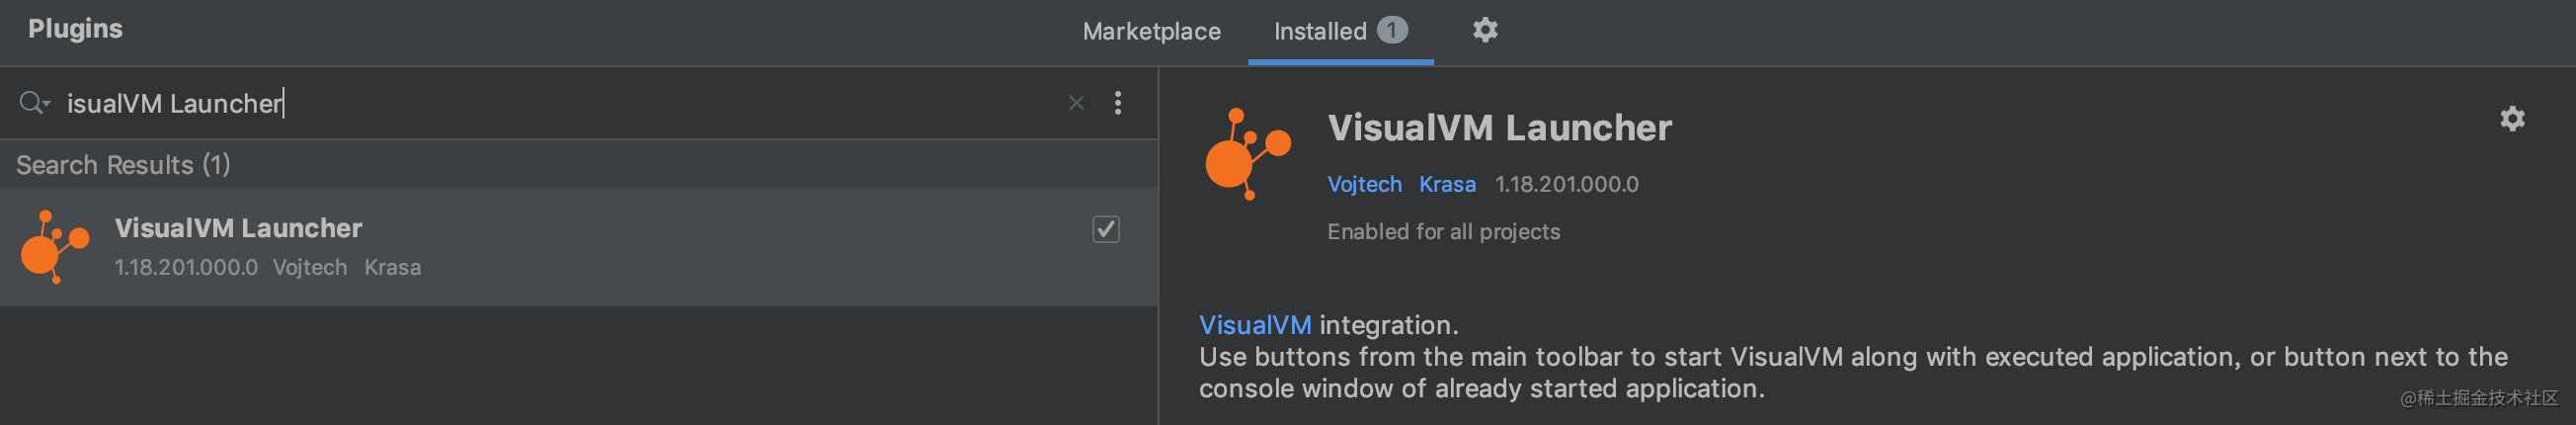 VisualVM Launcher